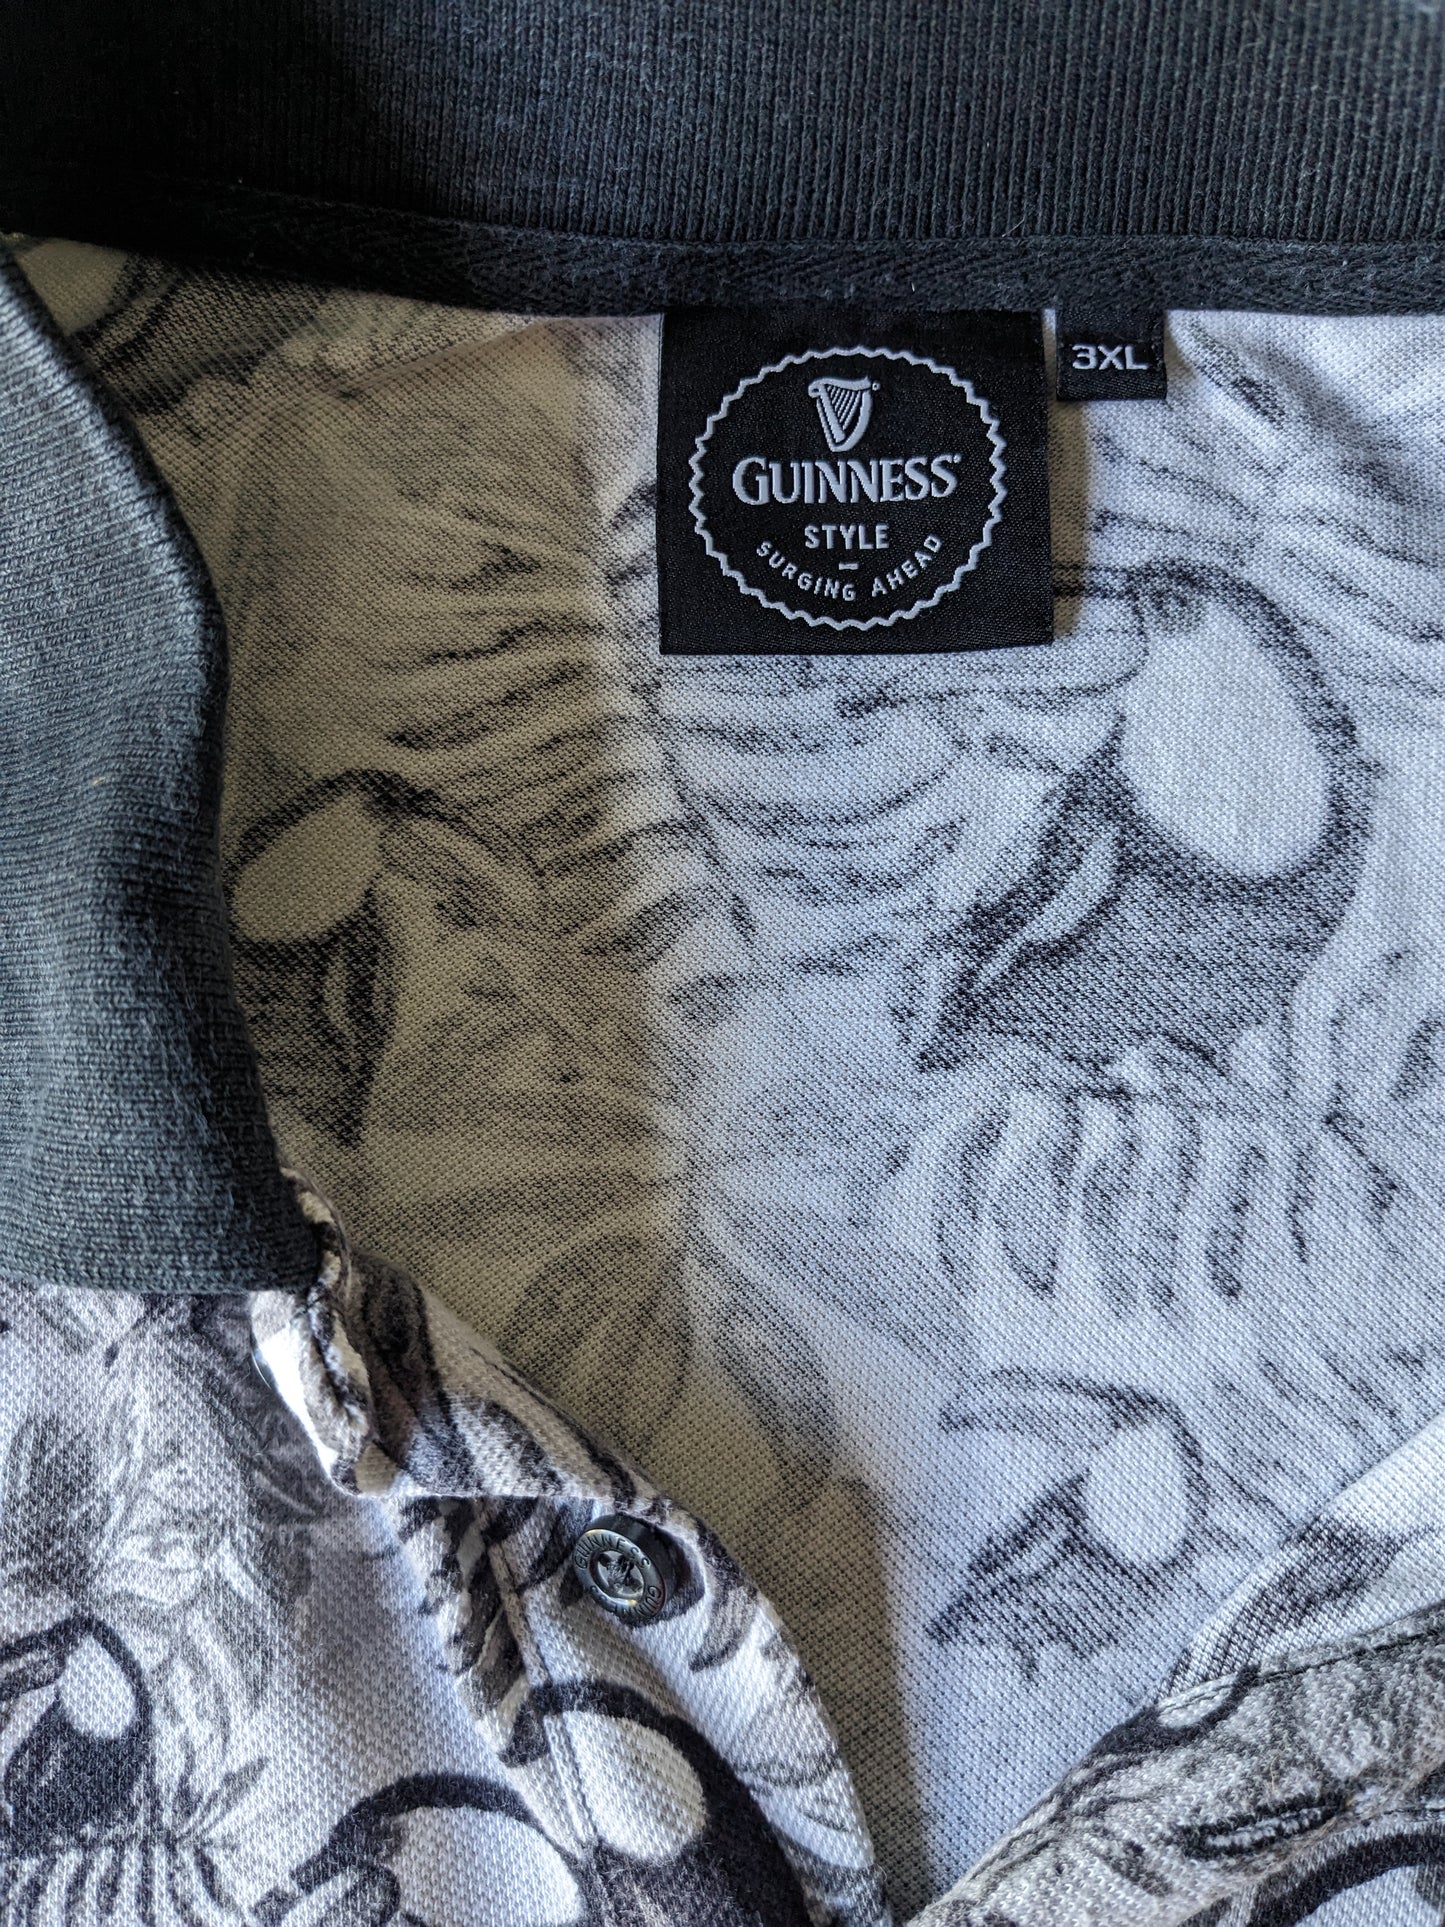 Guinness Style Polo. Black gray bird print. Size 3XL / XXXL.